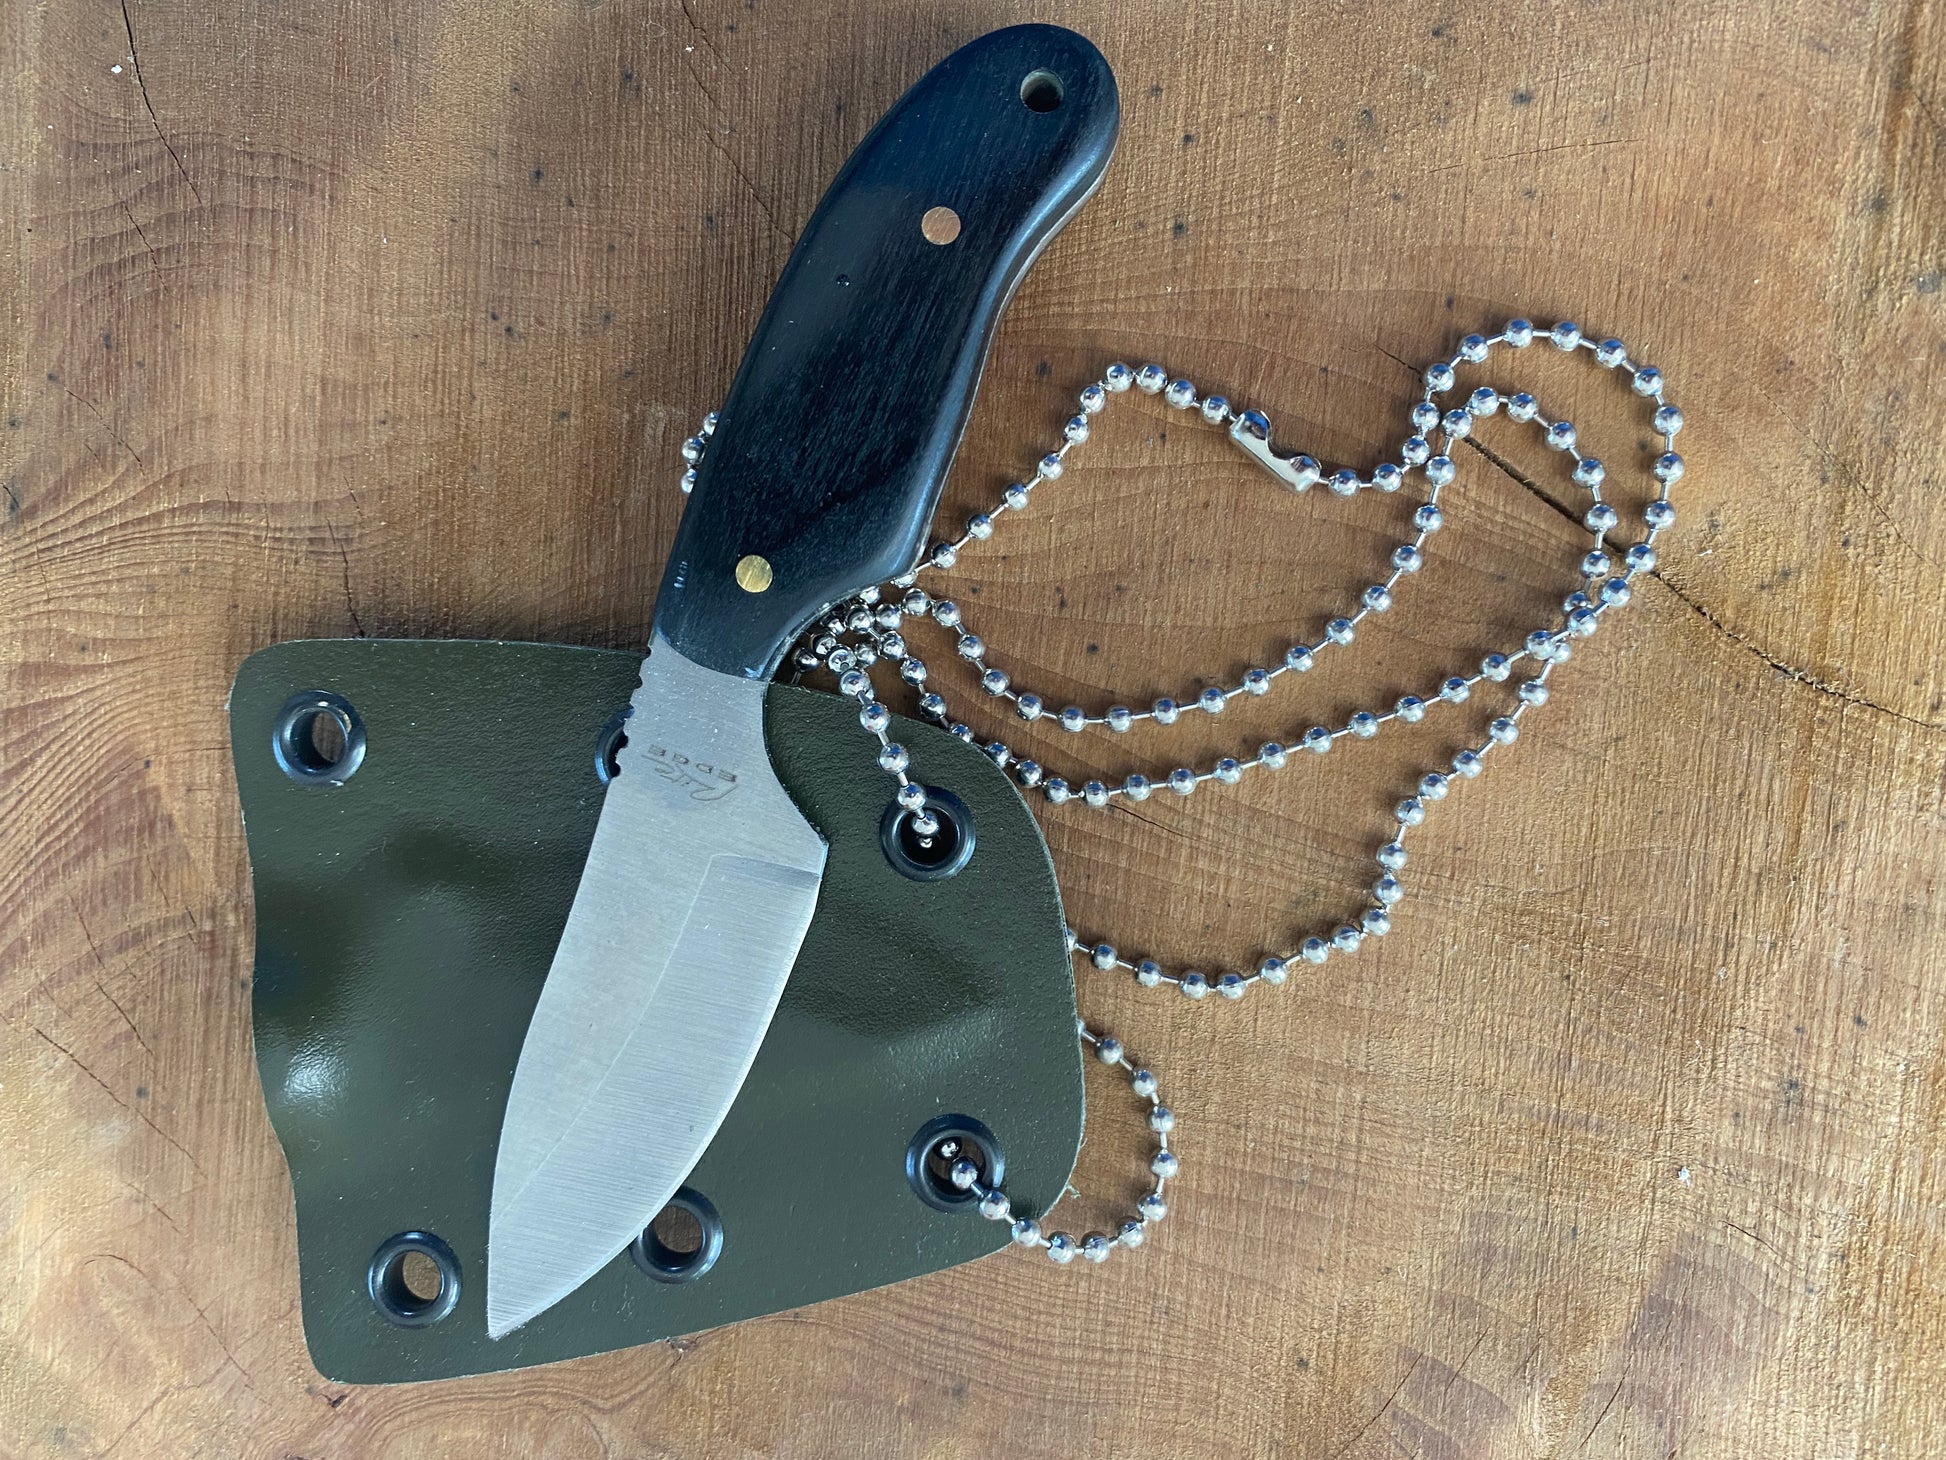 3” blade Camp Knife - Crowes Knives